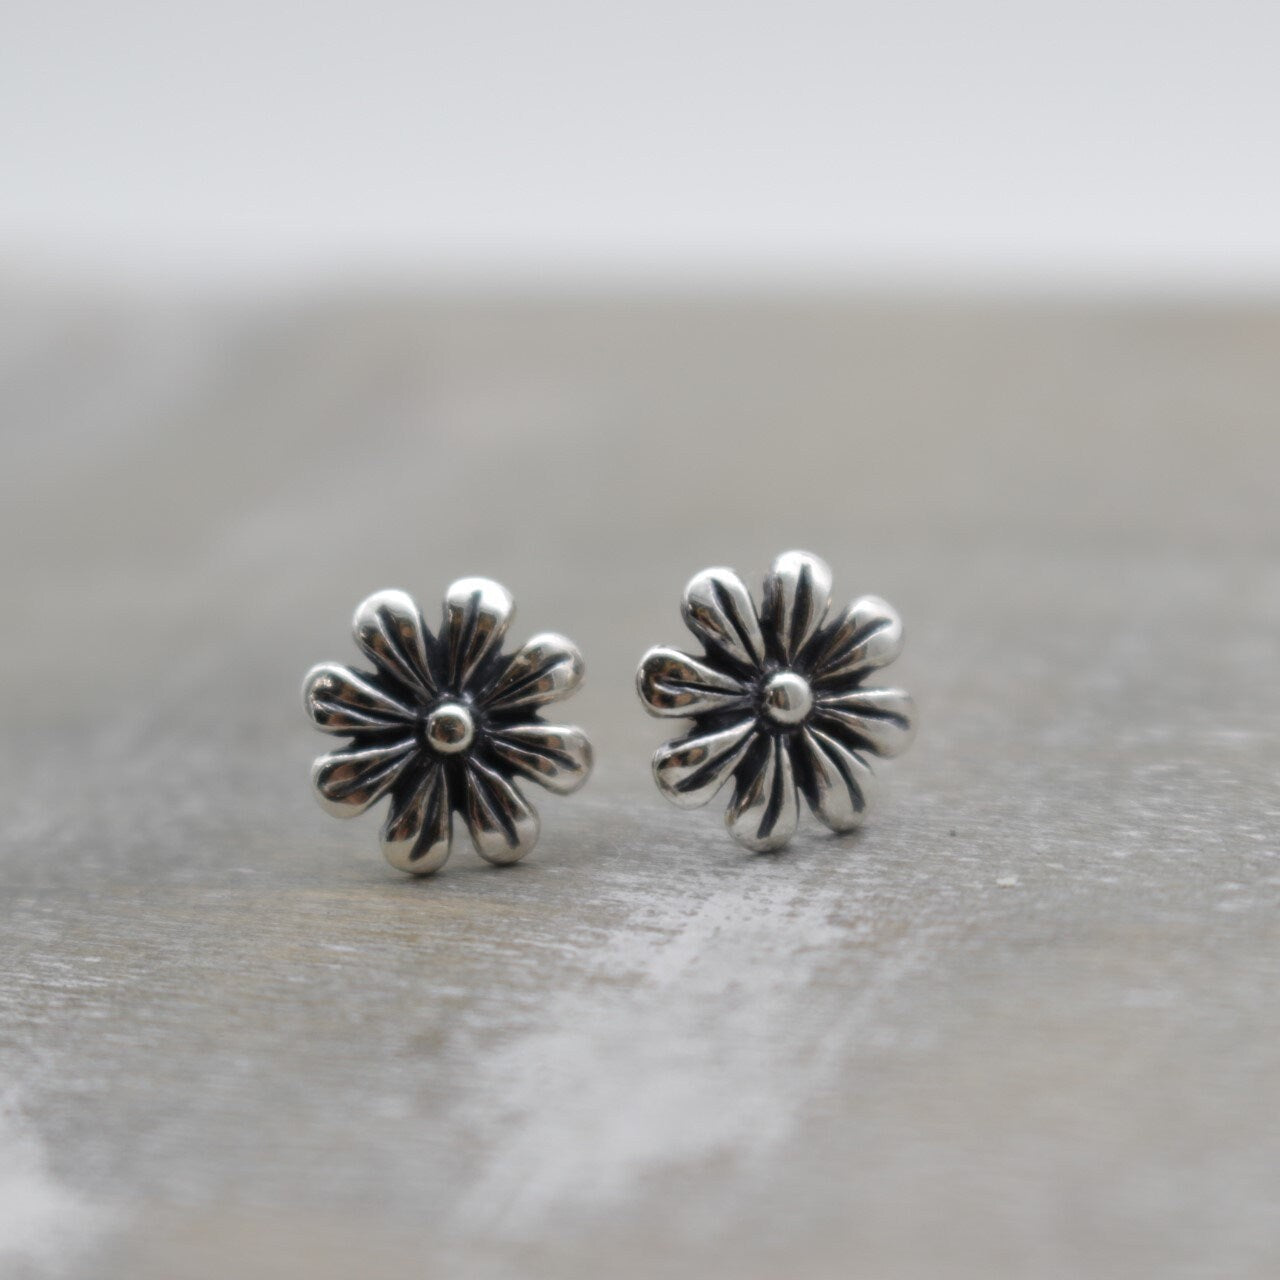 Small flower stud earring - Daisy earrings - sterling silver studs - gift for her - jewelry sale